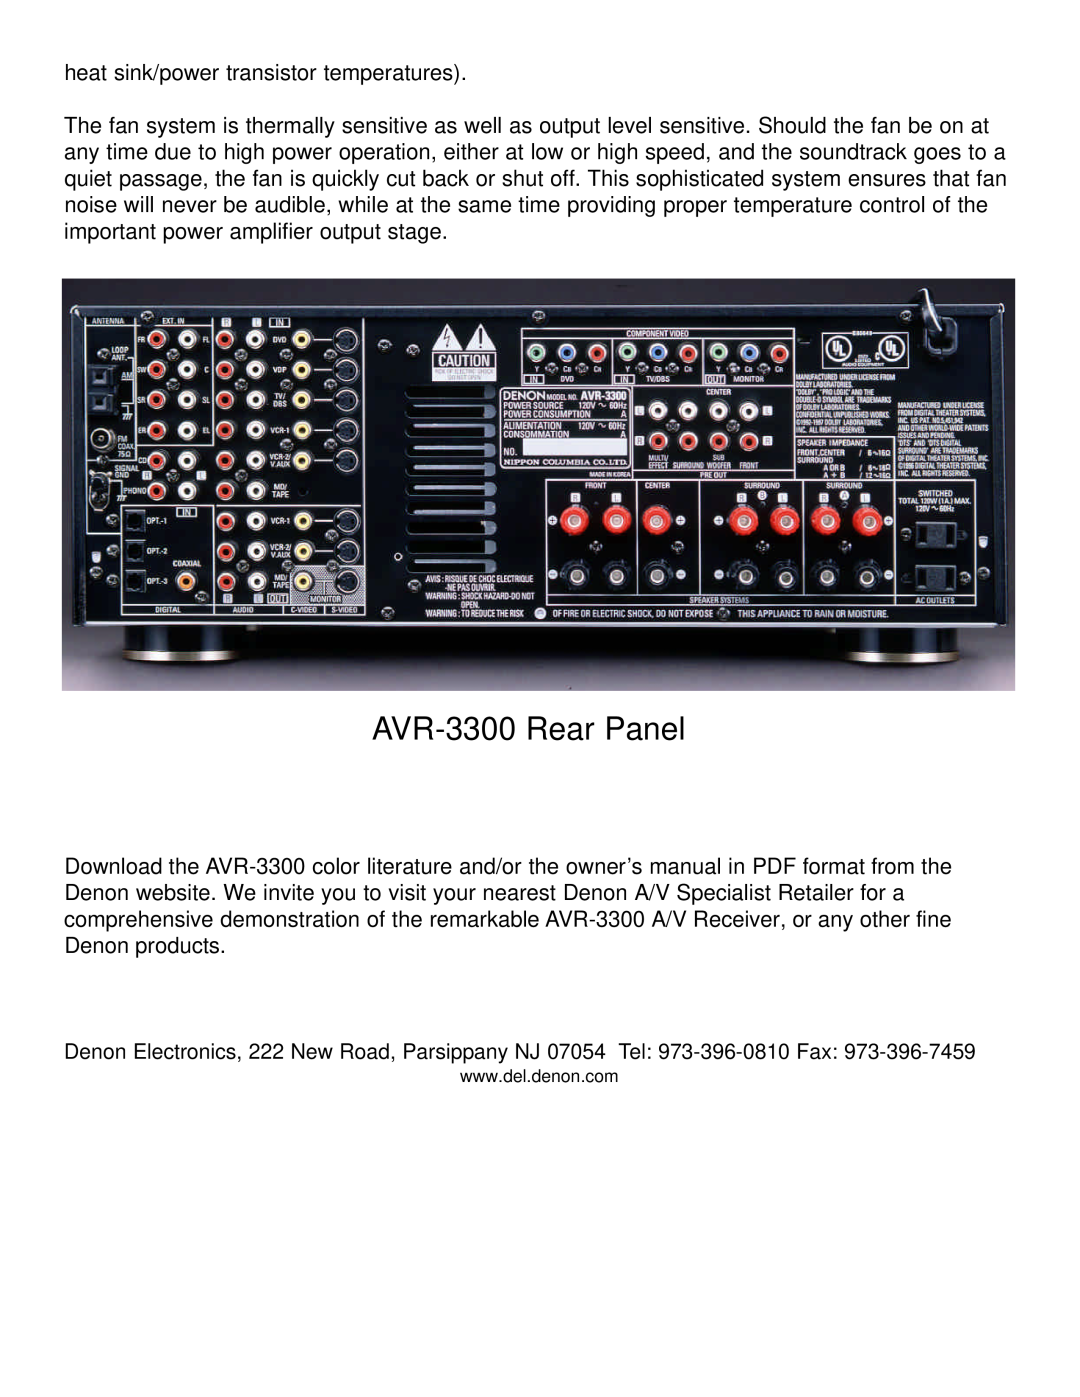 Denon manual AVR-3300Rear Panel 